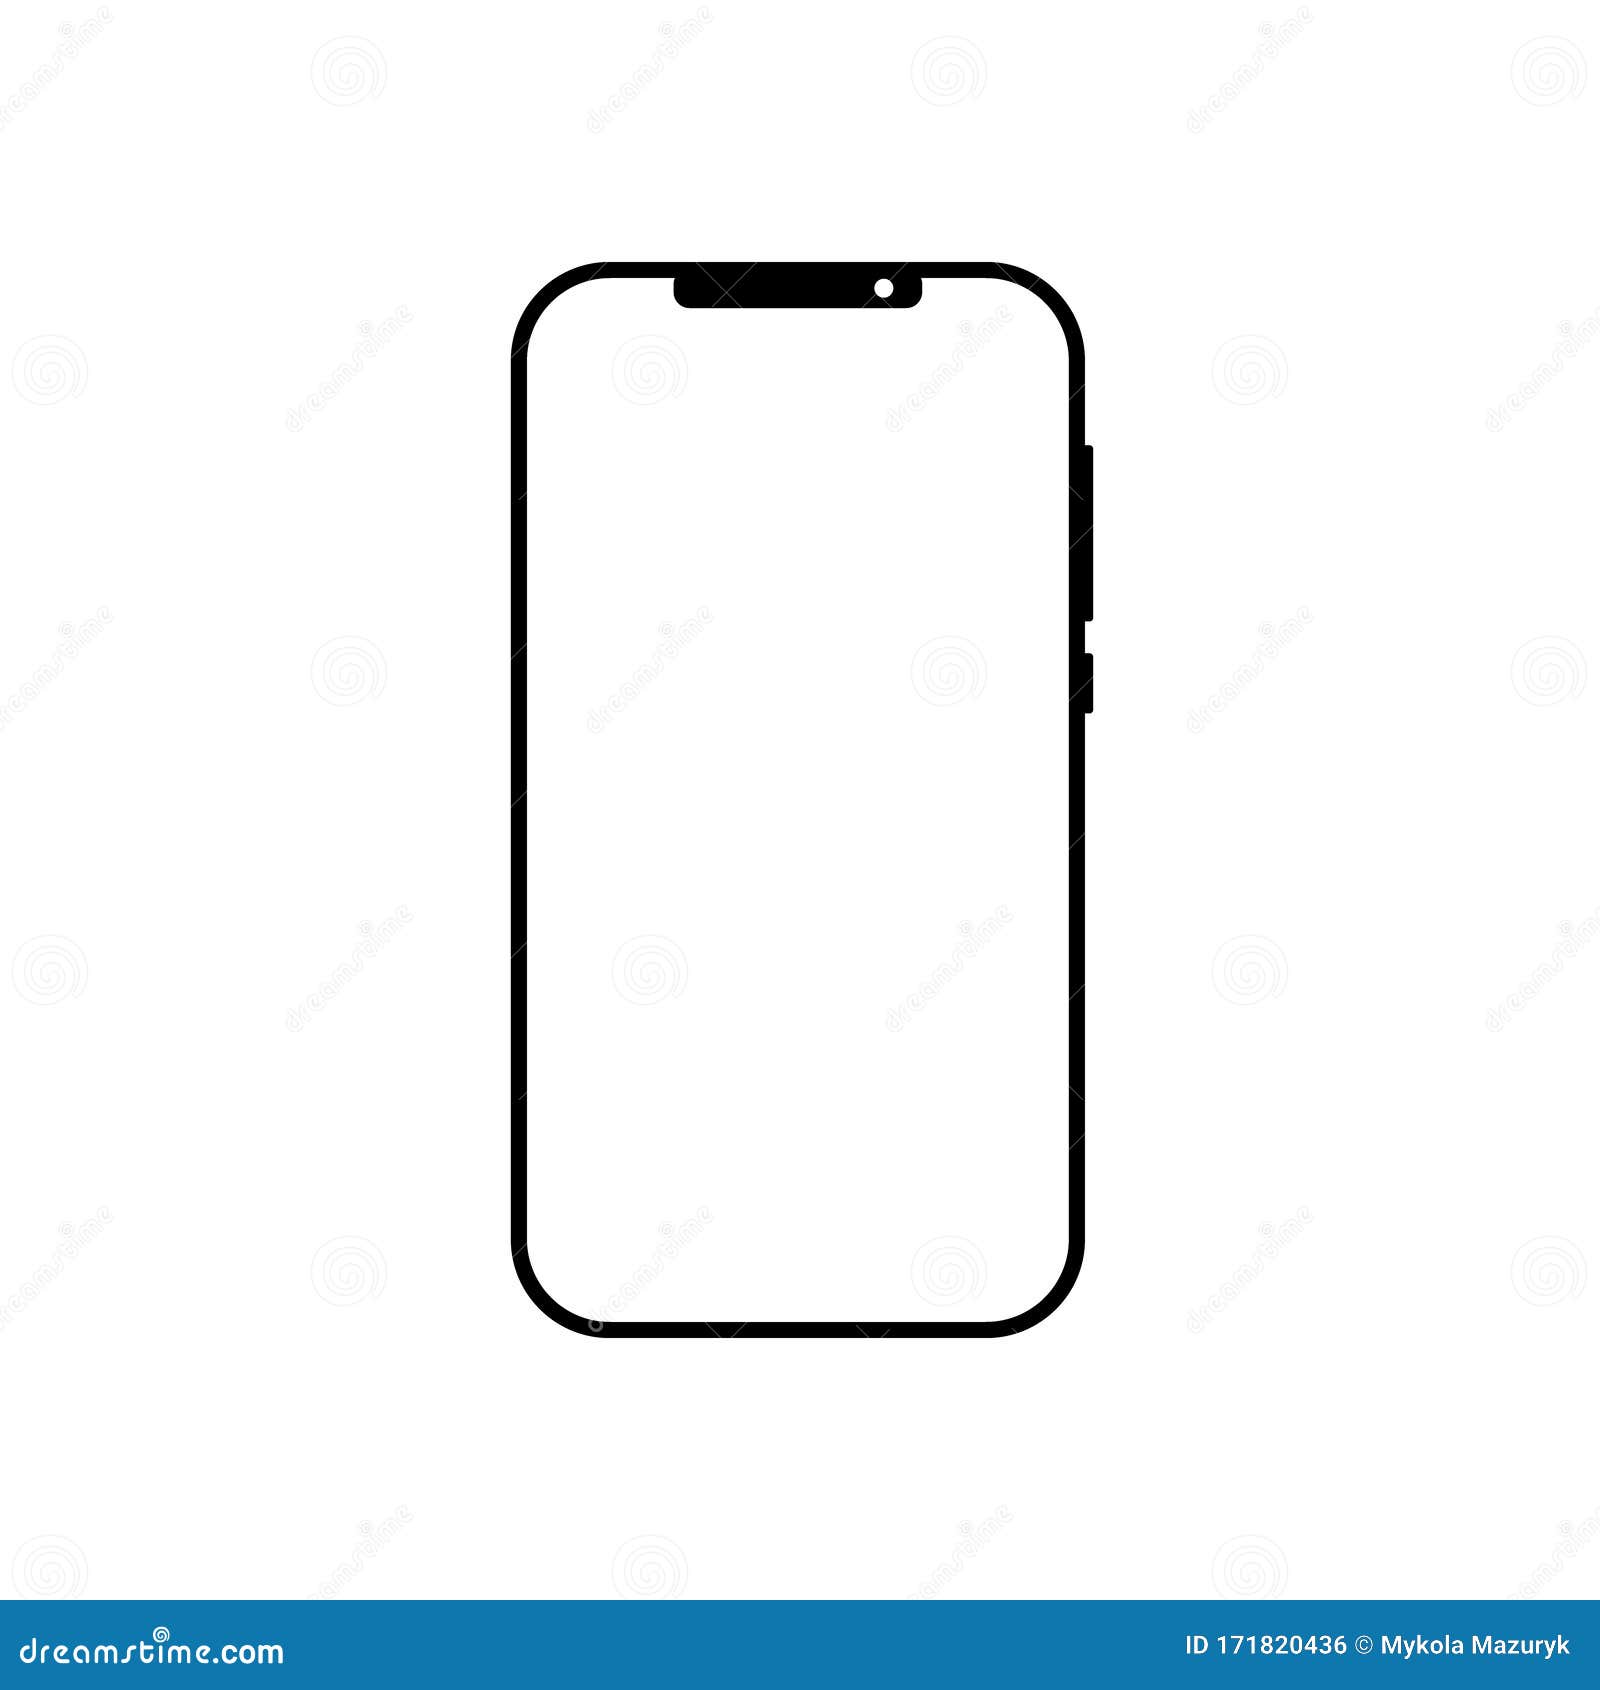 Smartphone Icon On White Background Vector Illustration Flat Icon Mobile Phone Handphone Application Stock Vector Illustration Of Flat Isolated